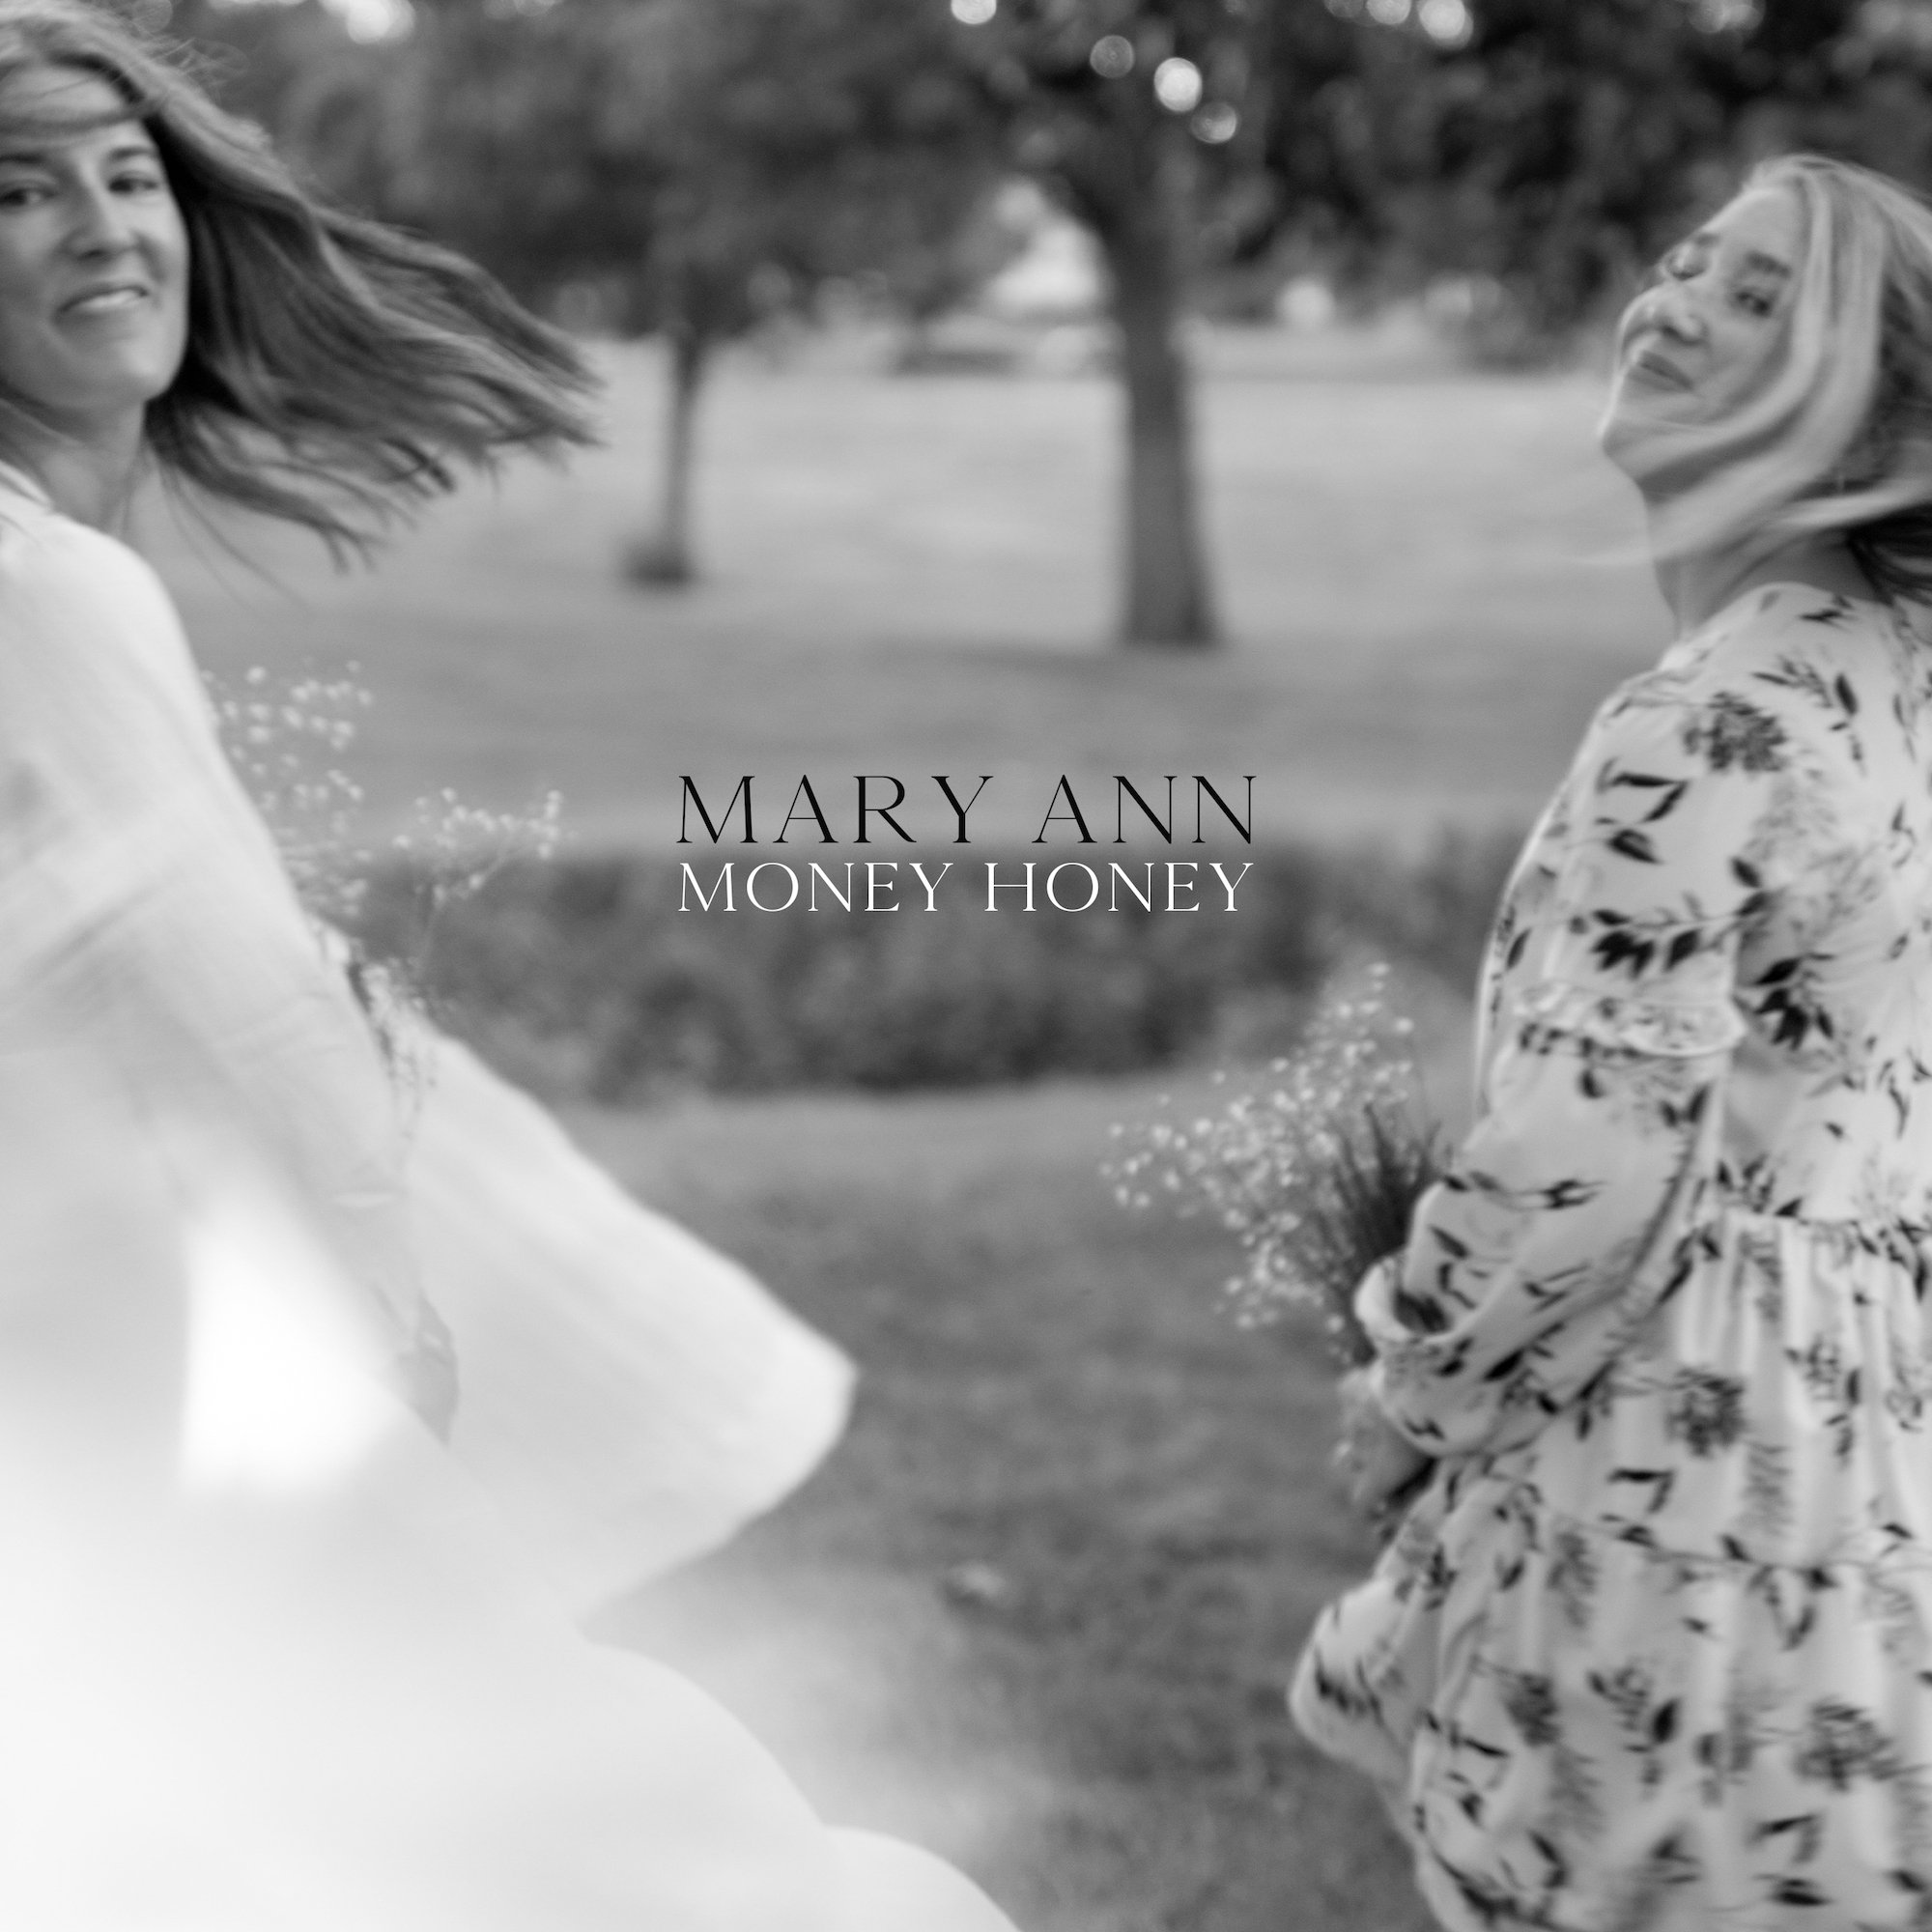 Money Honey by Mary Ann